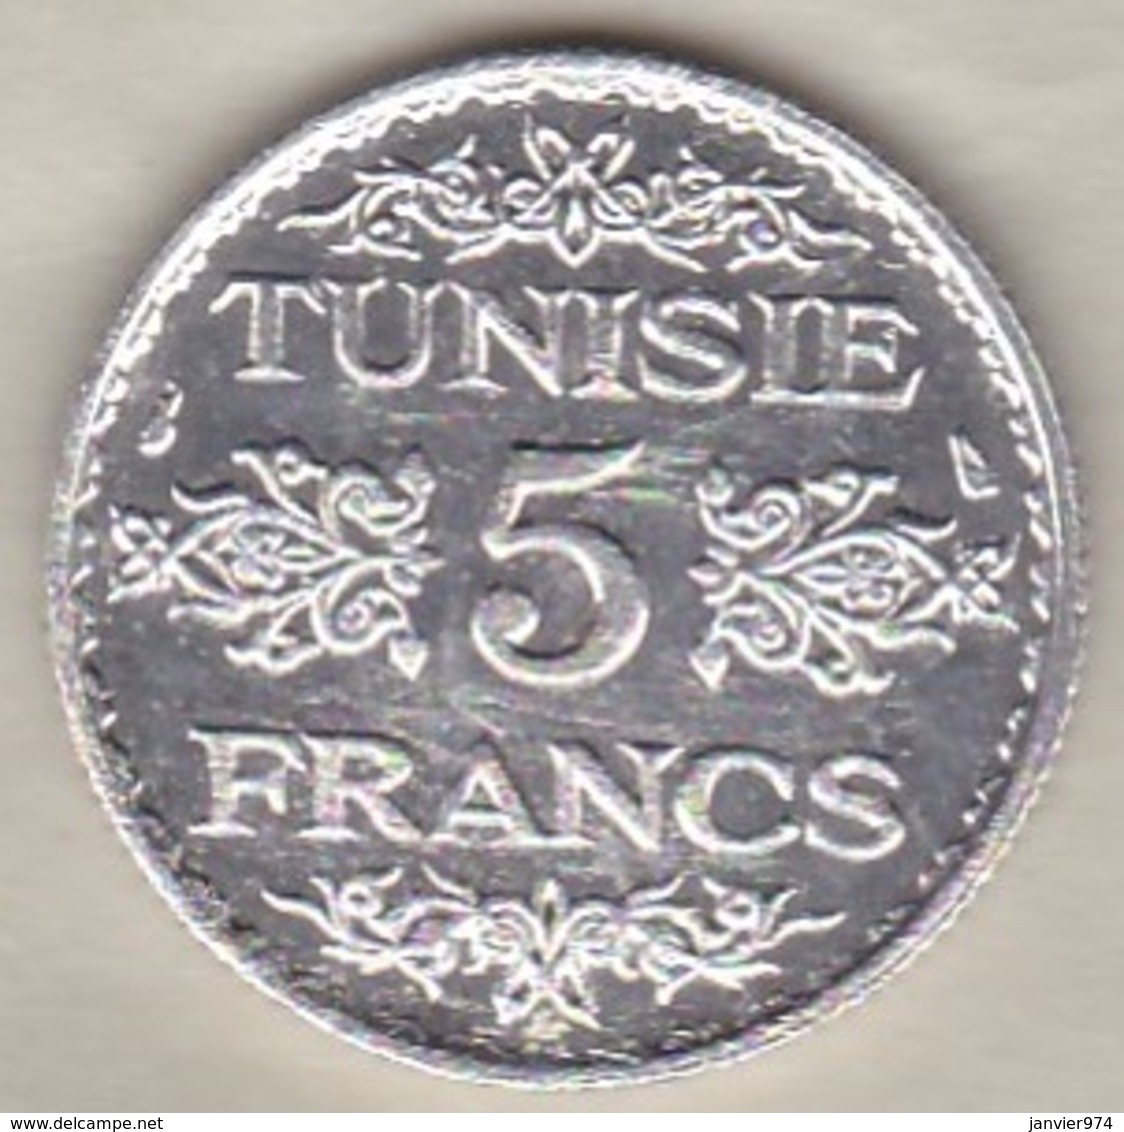 TUNISIE. 5 FRANCS 1936 (AH 1355). ARGENT / SILVER - Túnez